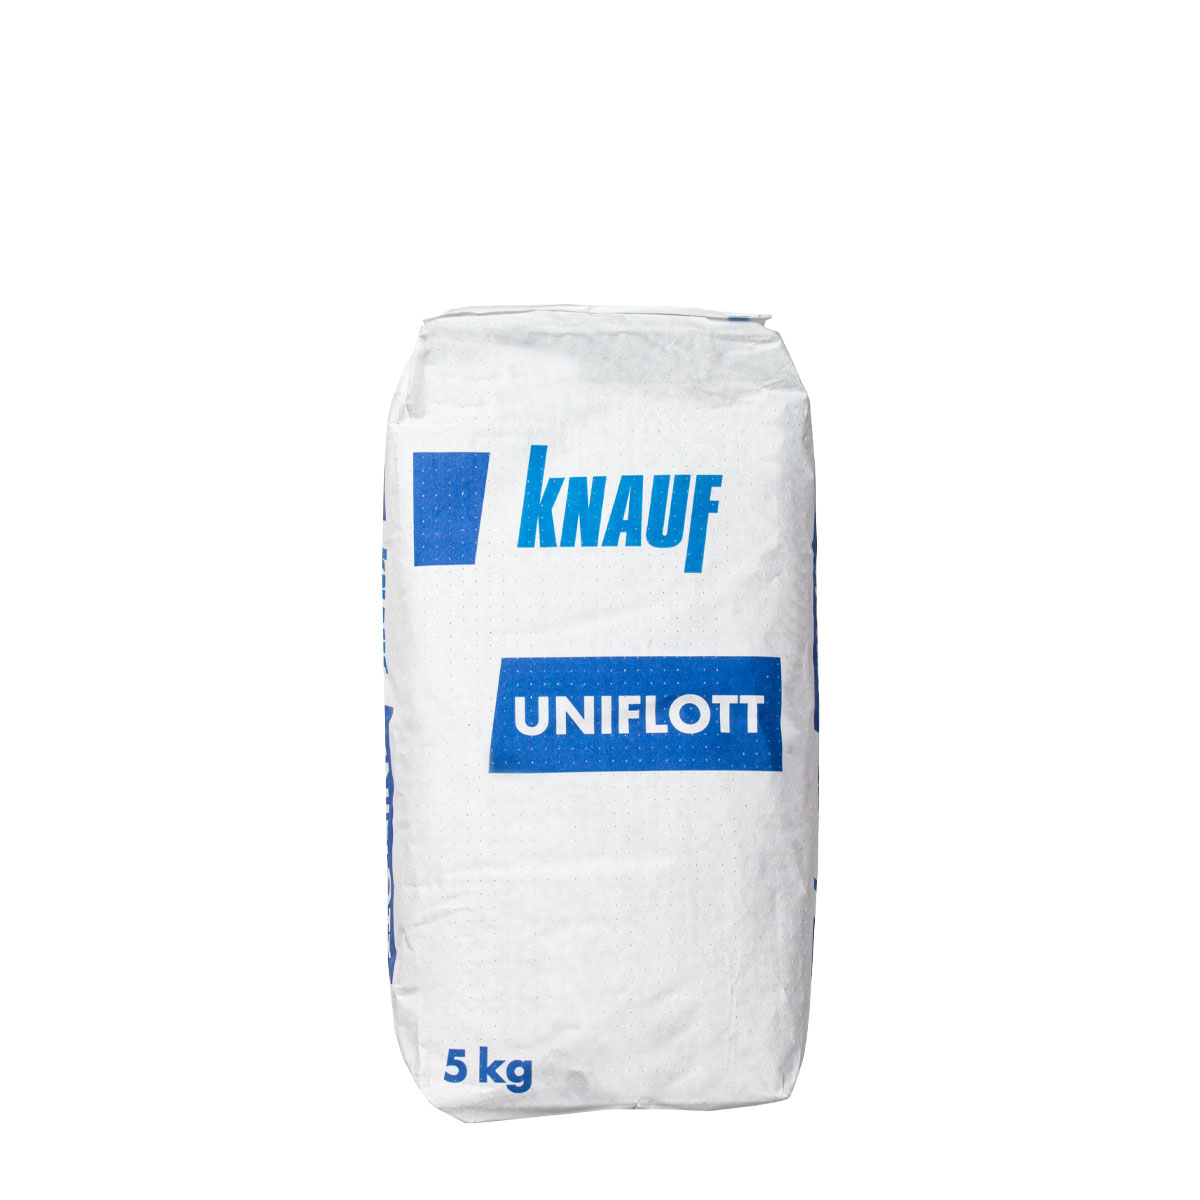 Knauf Uniflott 5kg, Gips-Spachtelmasse